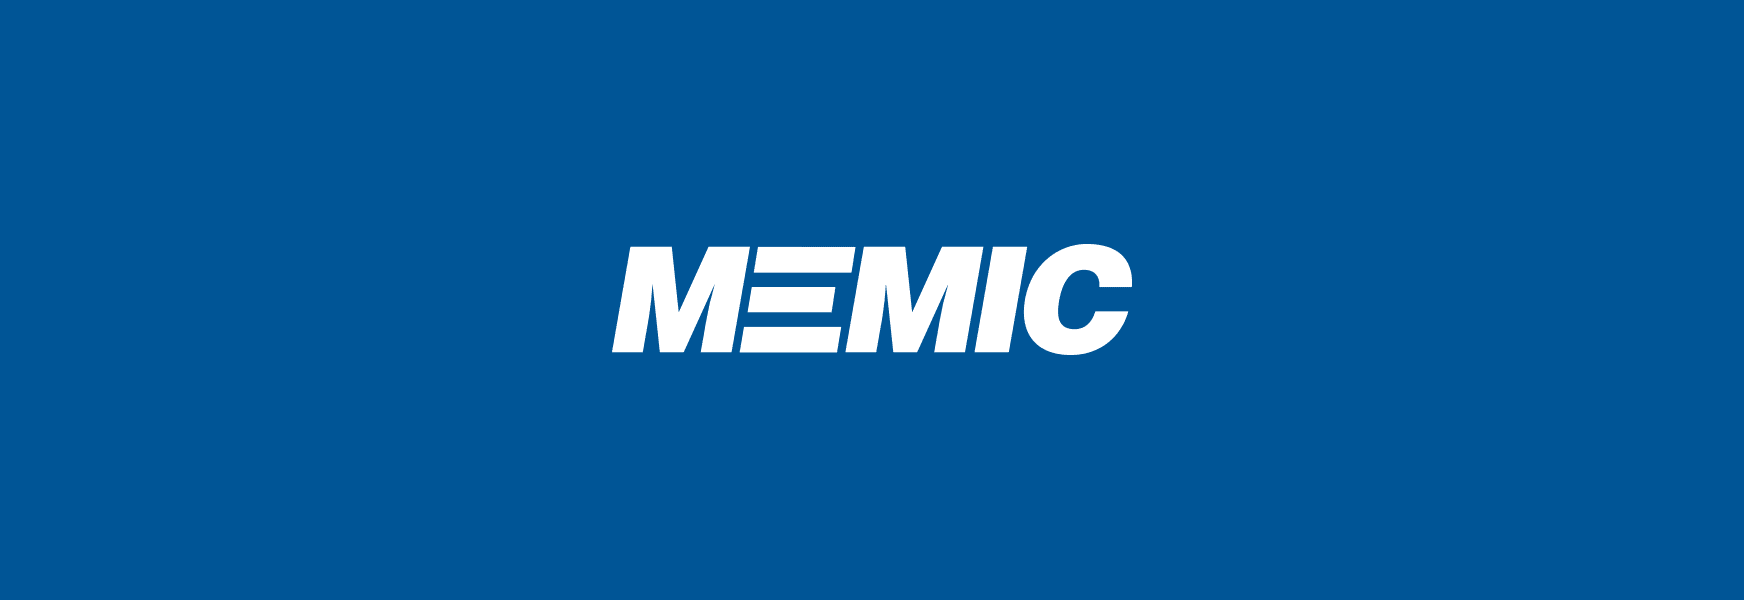 MEMIC Taps CLARA Analytics for AI-Powered Claims Management